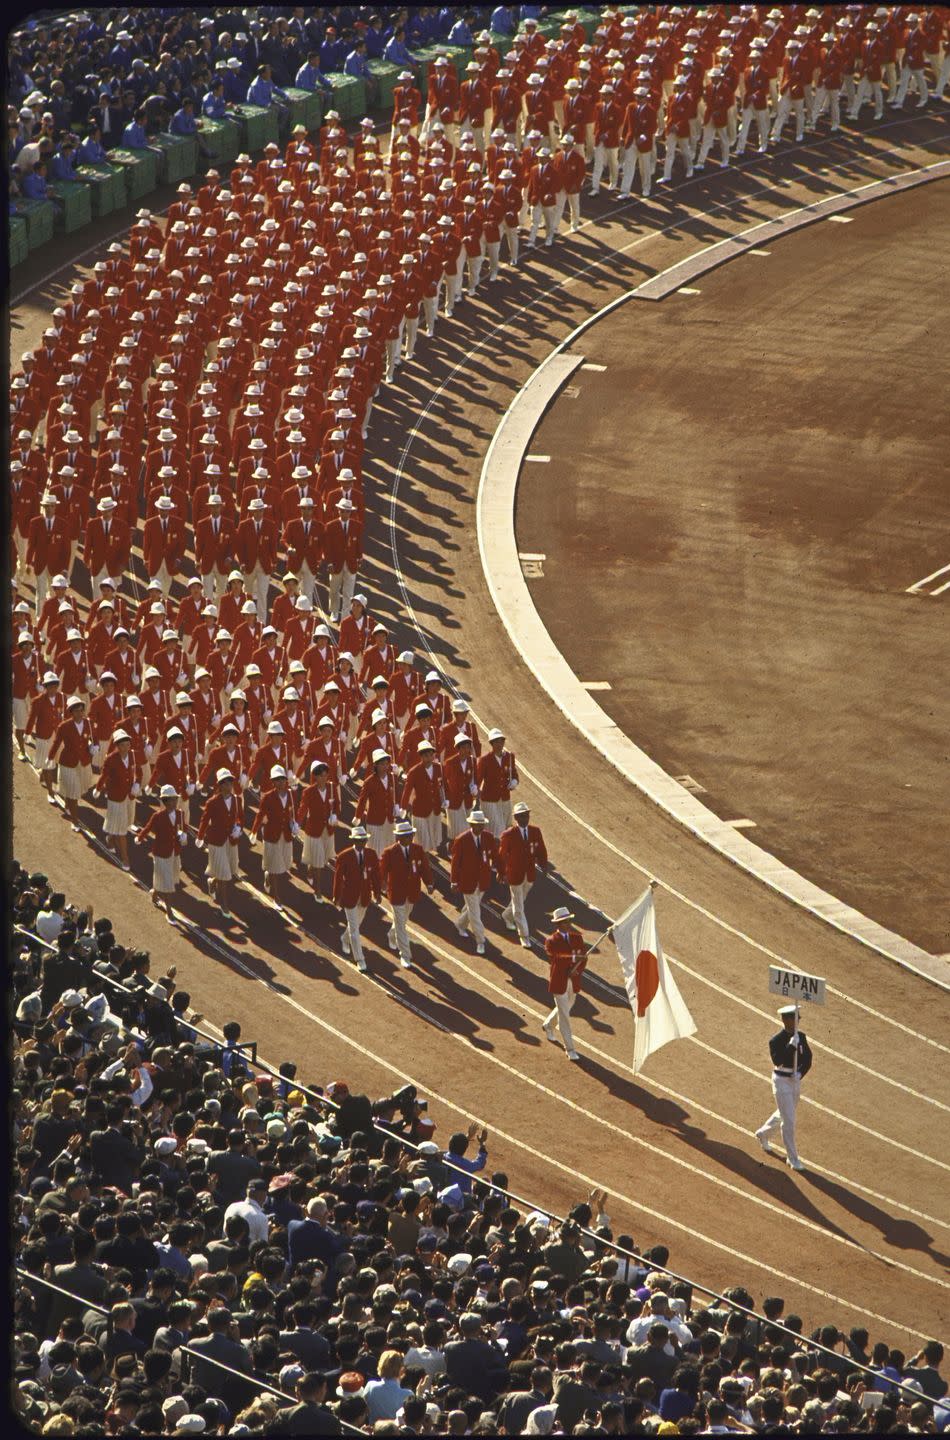 1964: Japan's Olympic Teams